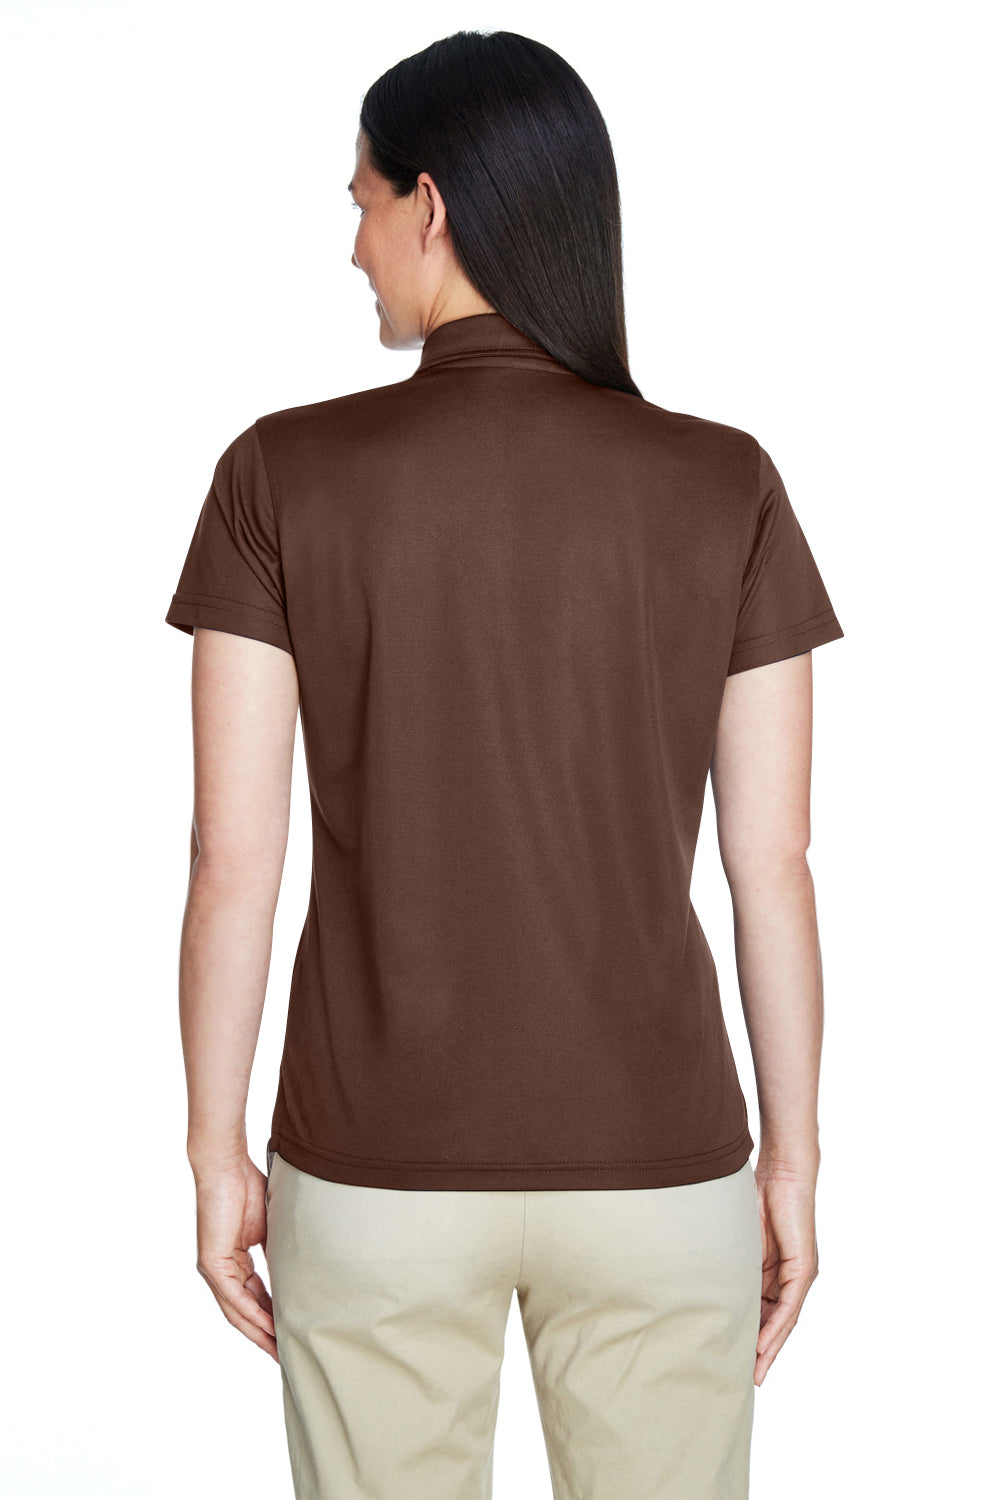 Team 365 TT21W Womens Command Performance Moisture Wicking Short Sleeve Polo Shirt Brown Back